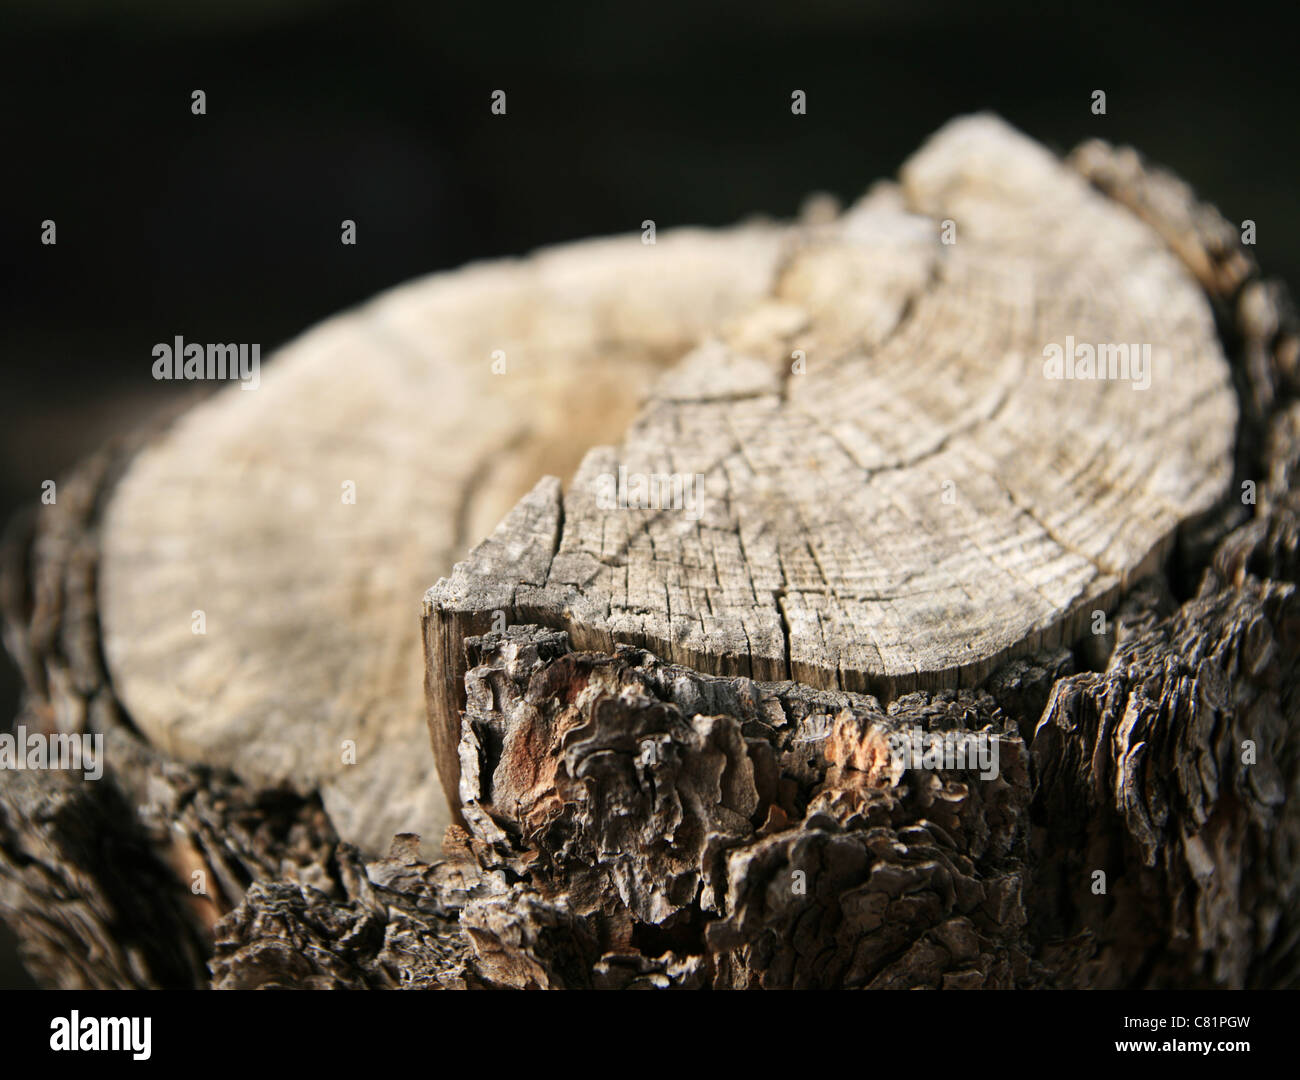 cut pine tree stump with shallow depth of field Stock Photo